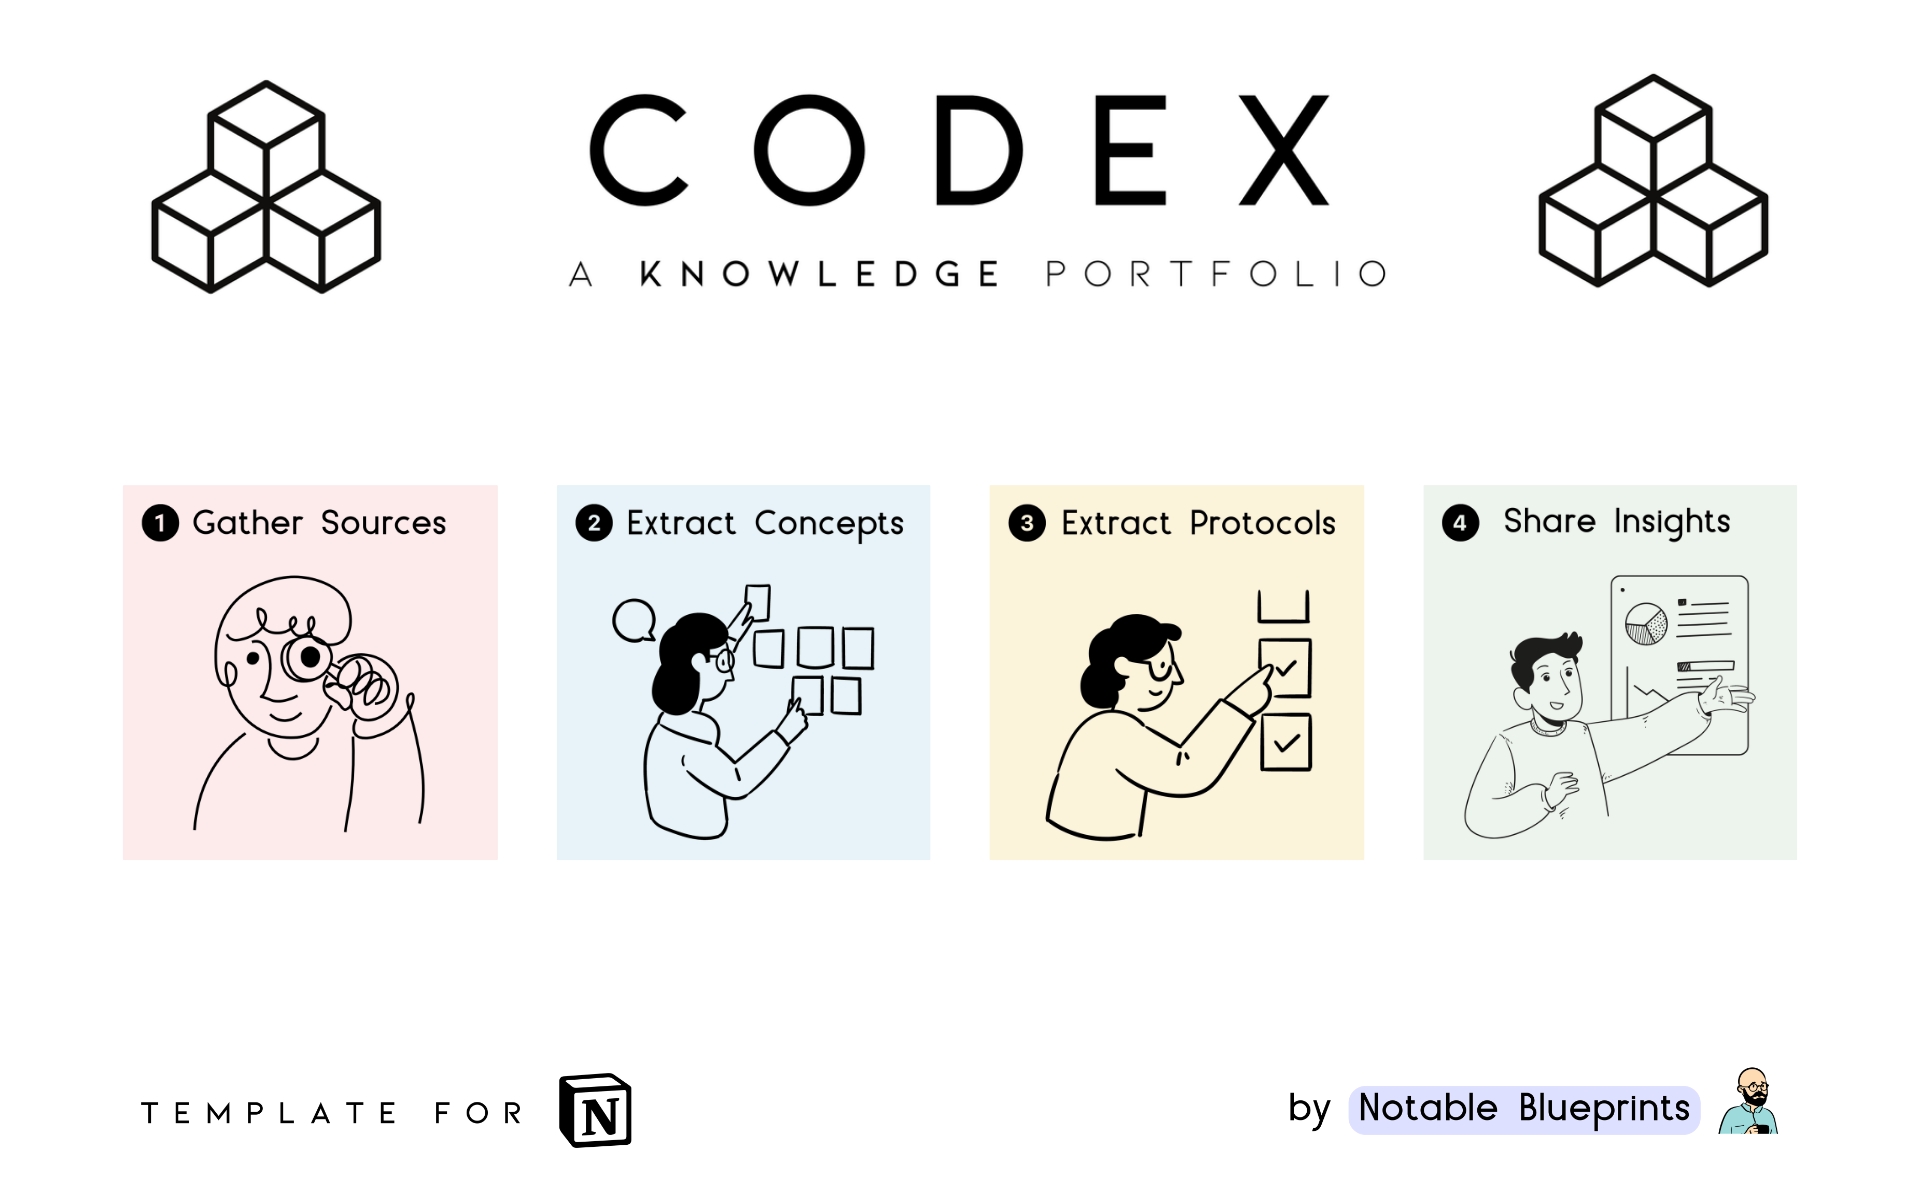 Vista previa de plantilla para ⫷ CODEX ⫸ A Knowledge Portfolio